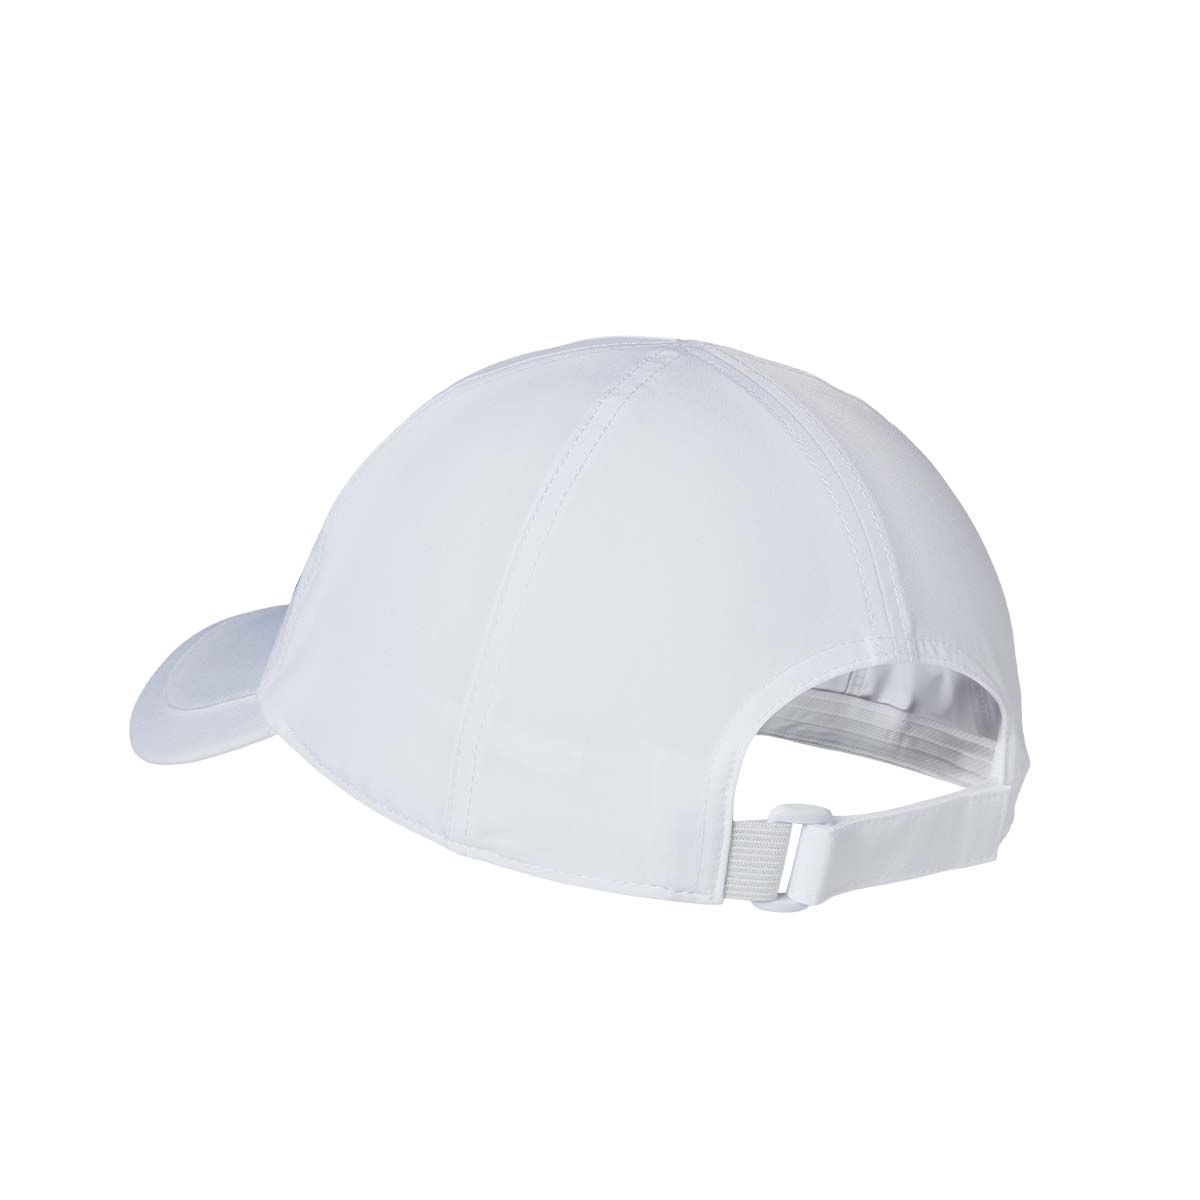 Asics PF Cap White כובע אסיקס